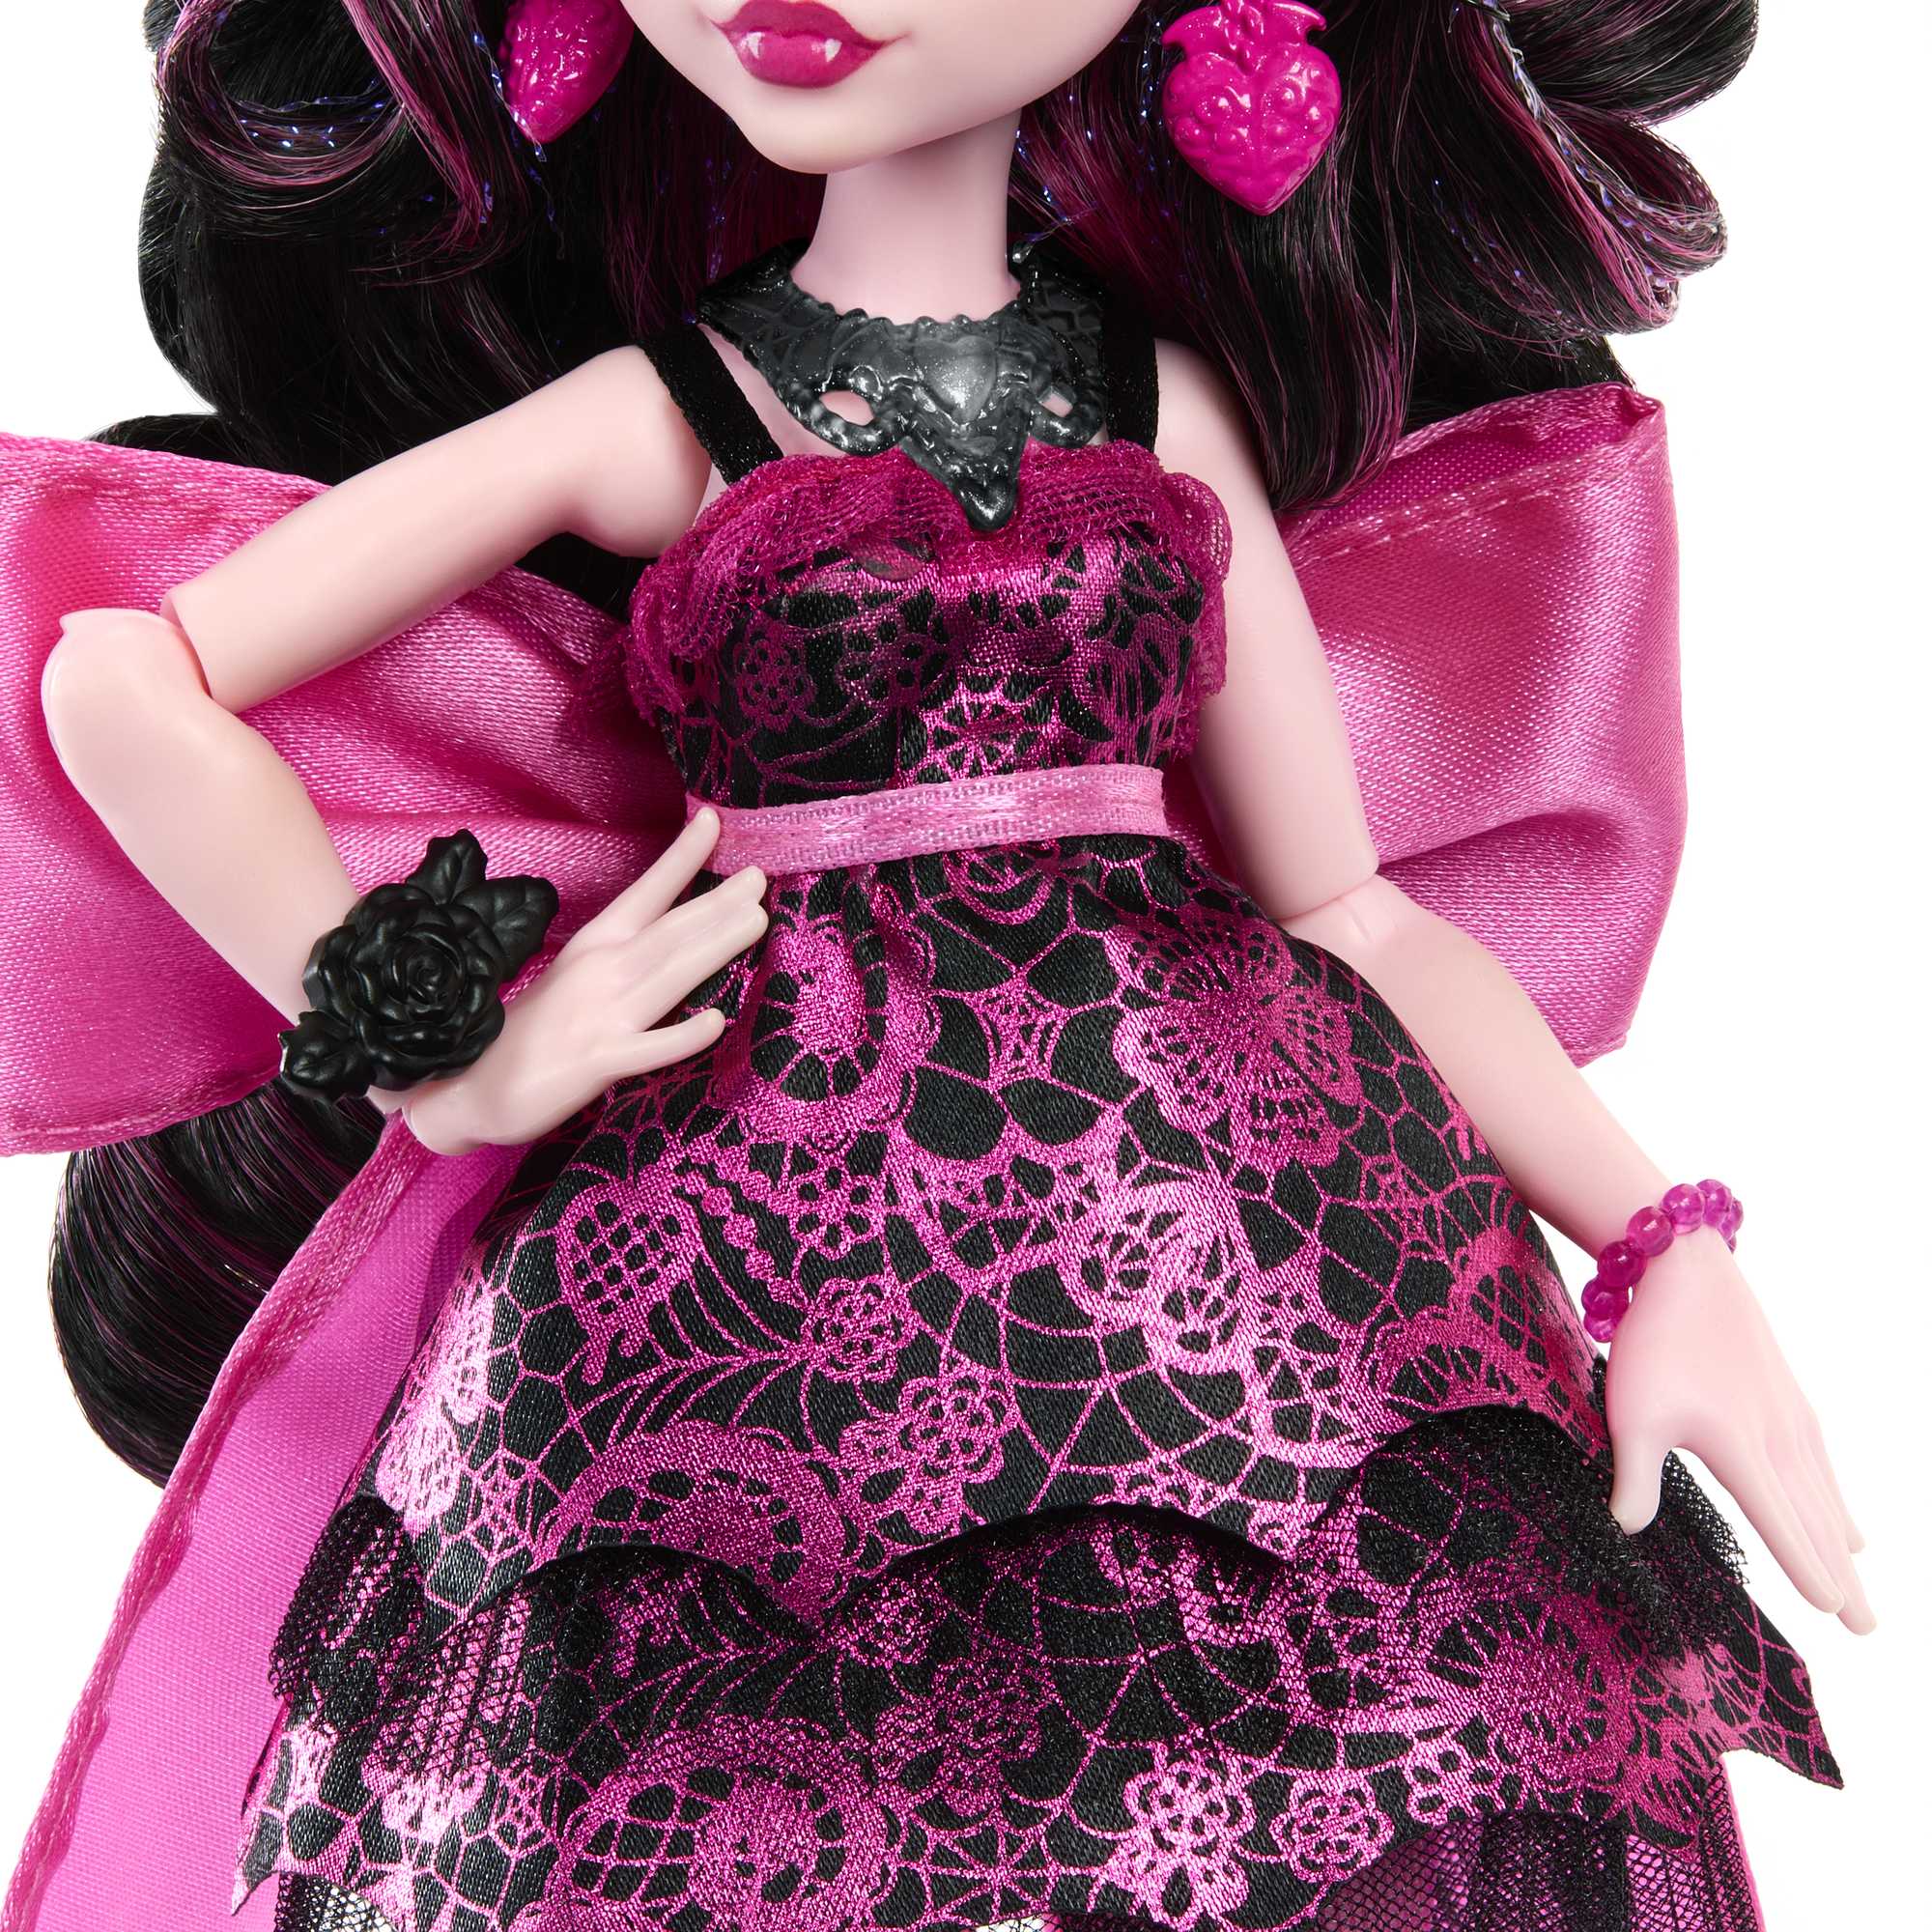 Mattel Fun Activities: Barbie, Monster High and Ever After High